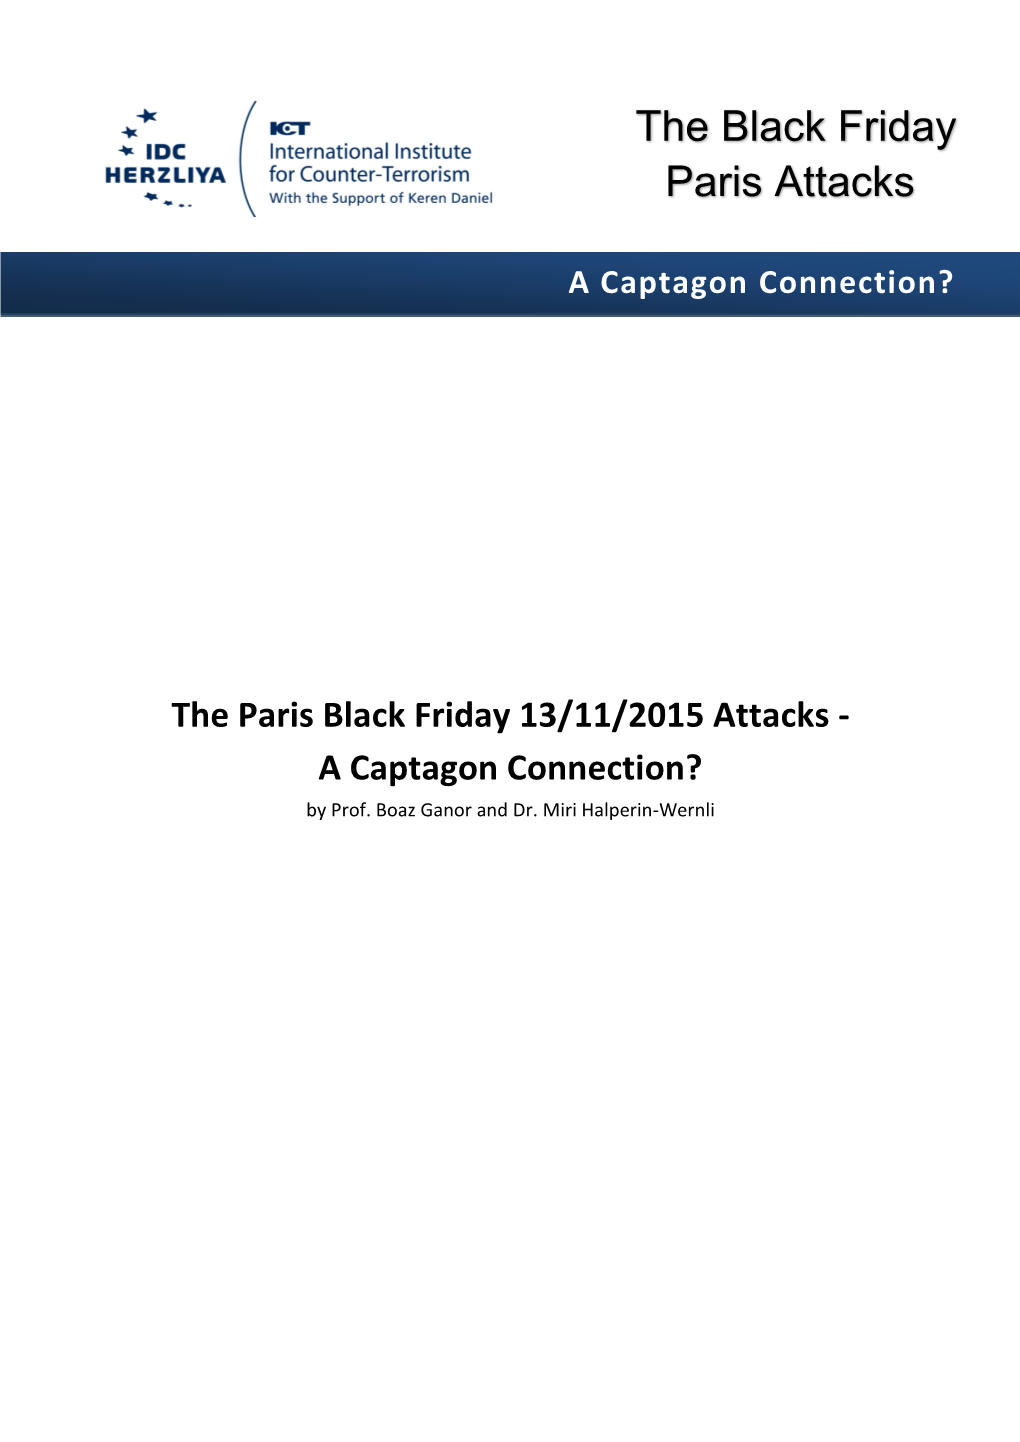 The Black Friday Paris Attacks